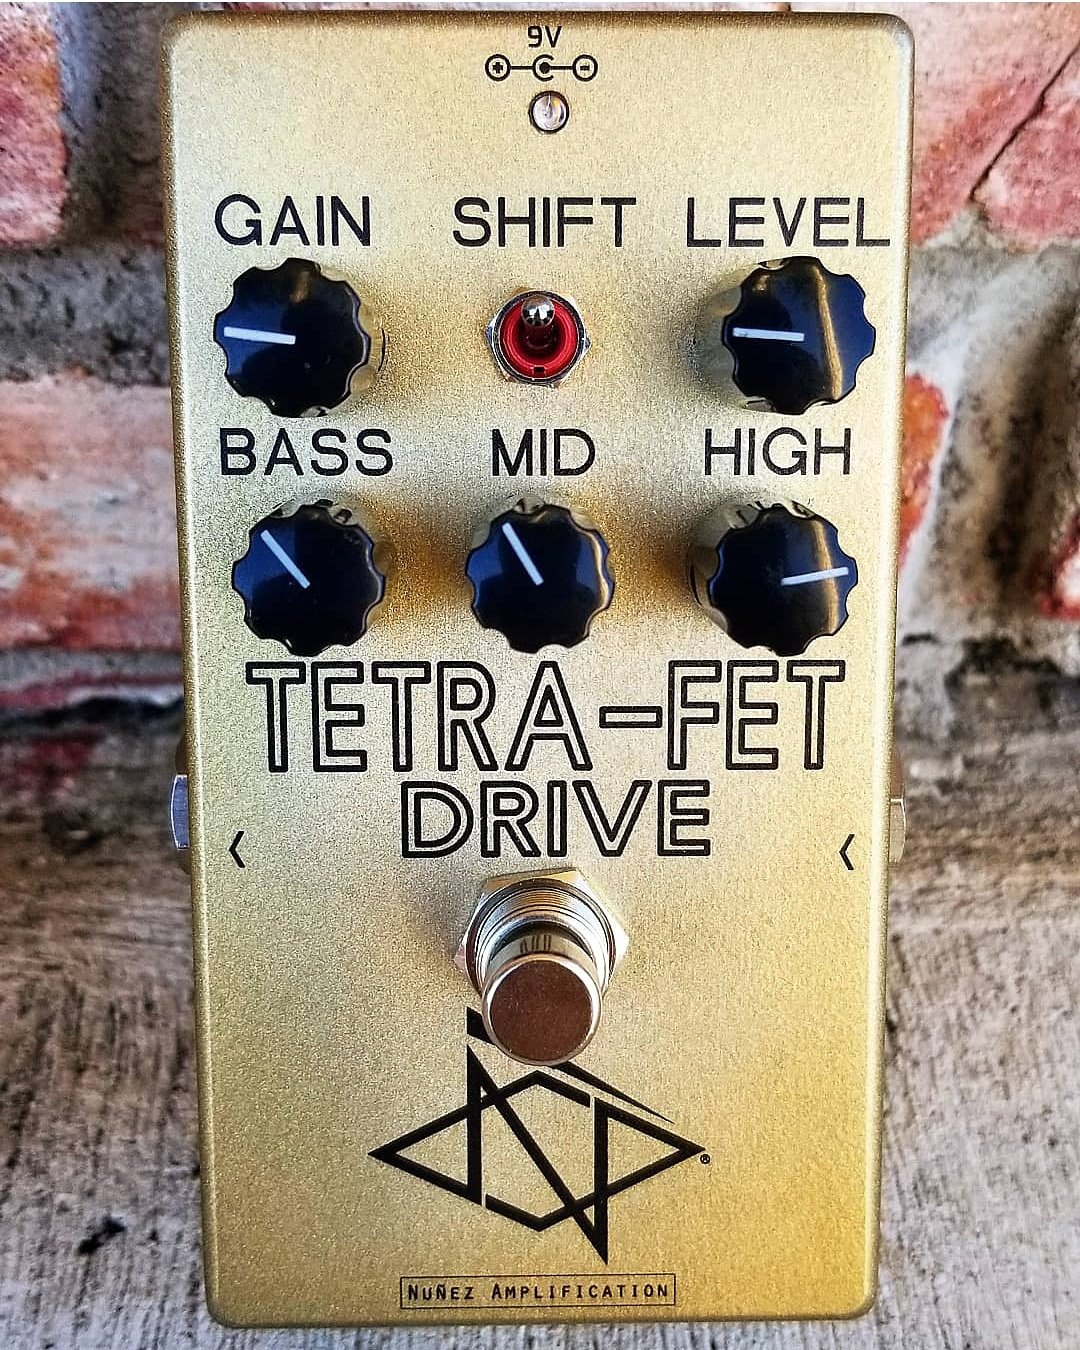 Tetra-Fet Drive | Nuñez Amplification